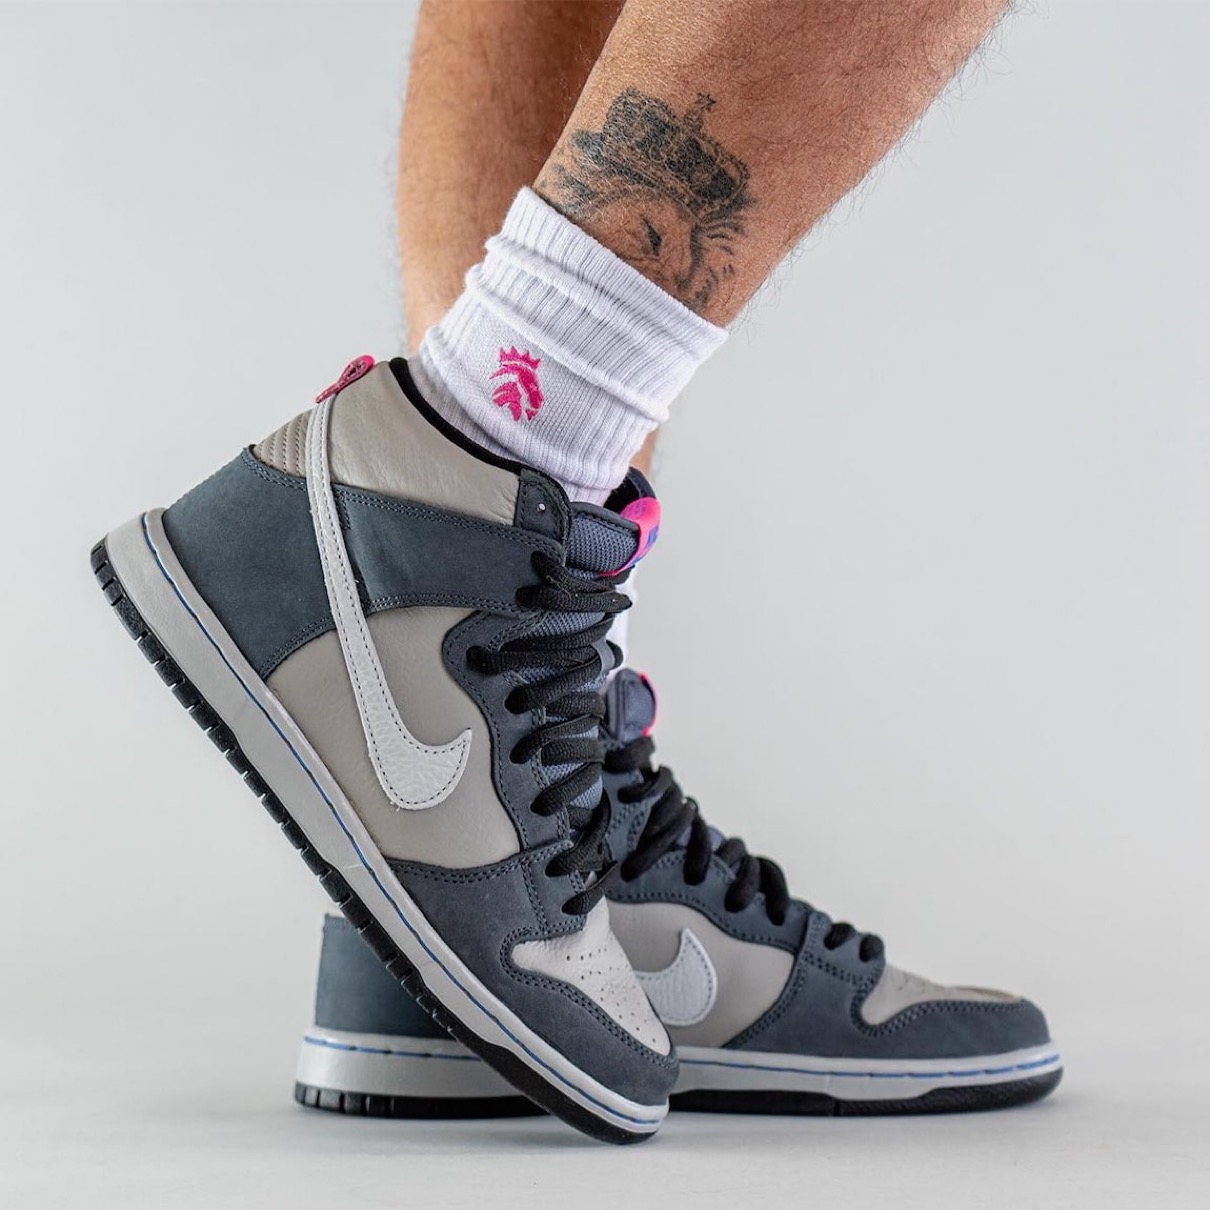 Nike SB】Dunk High Pro “Medium Grey”が国内1月8日に発売予定 | UP TO ...